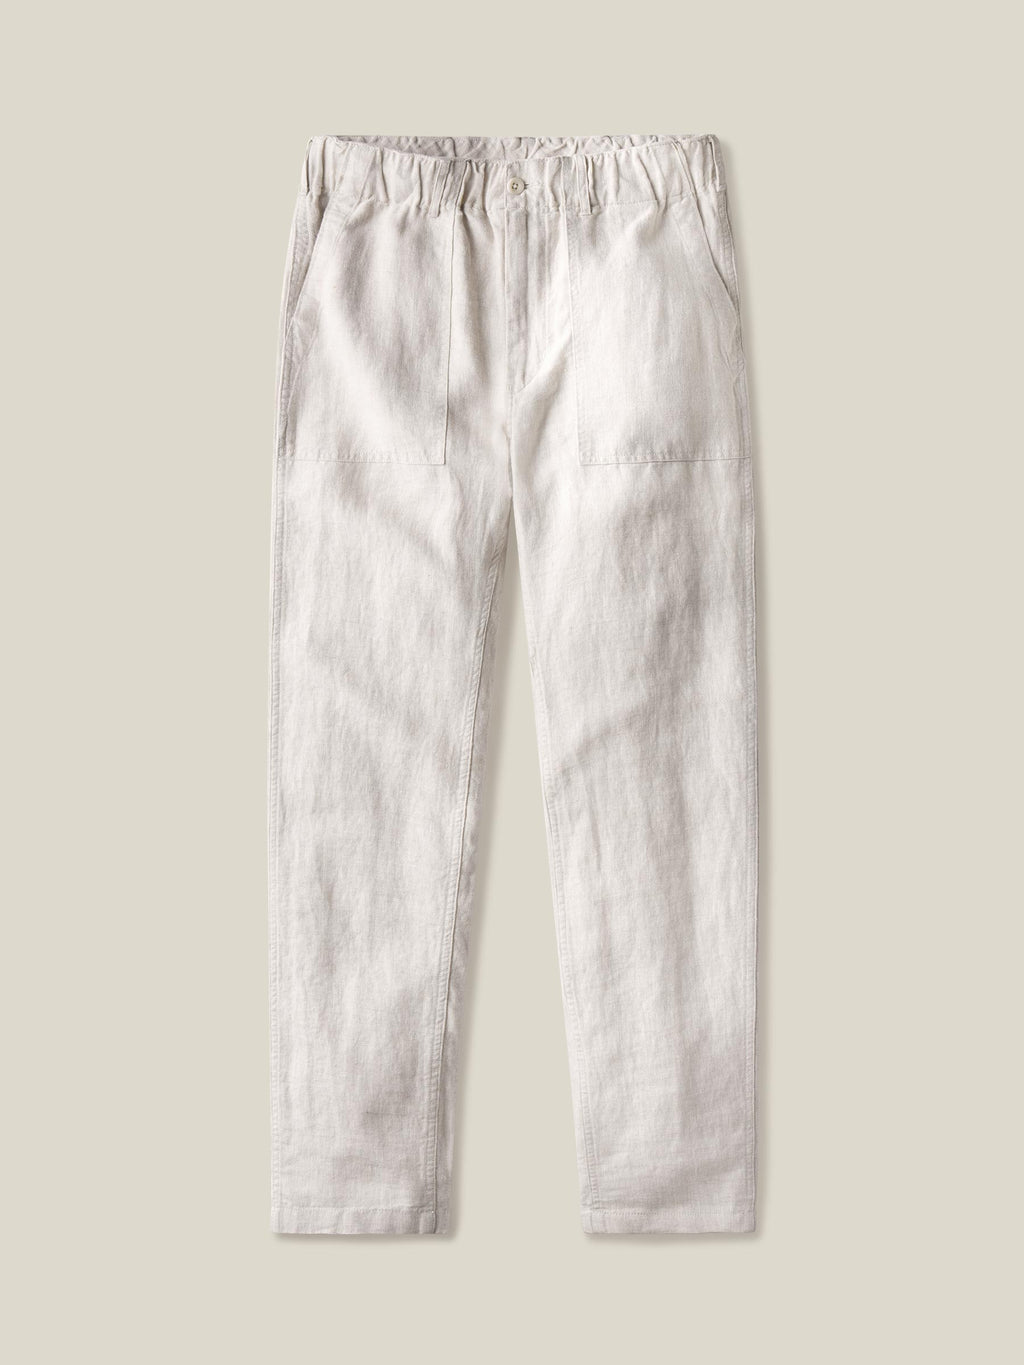 White Linen Pants, Buy Women's White Linen Pants New Zealand